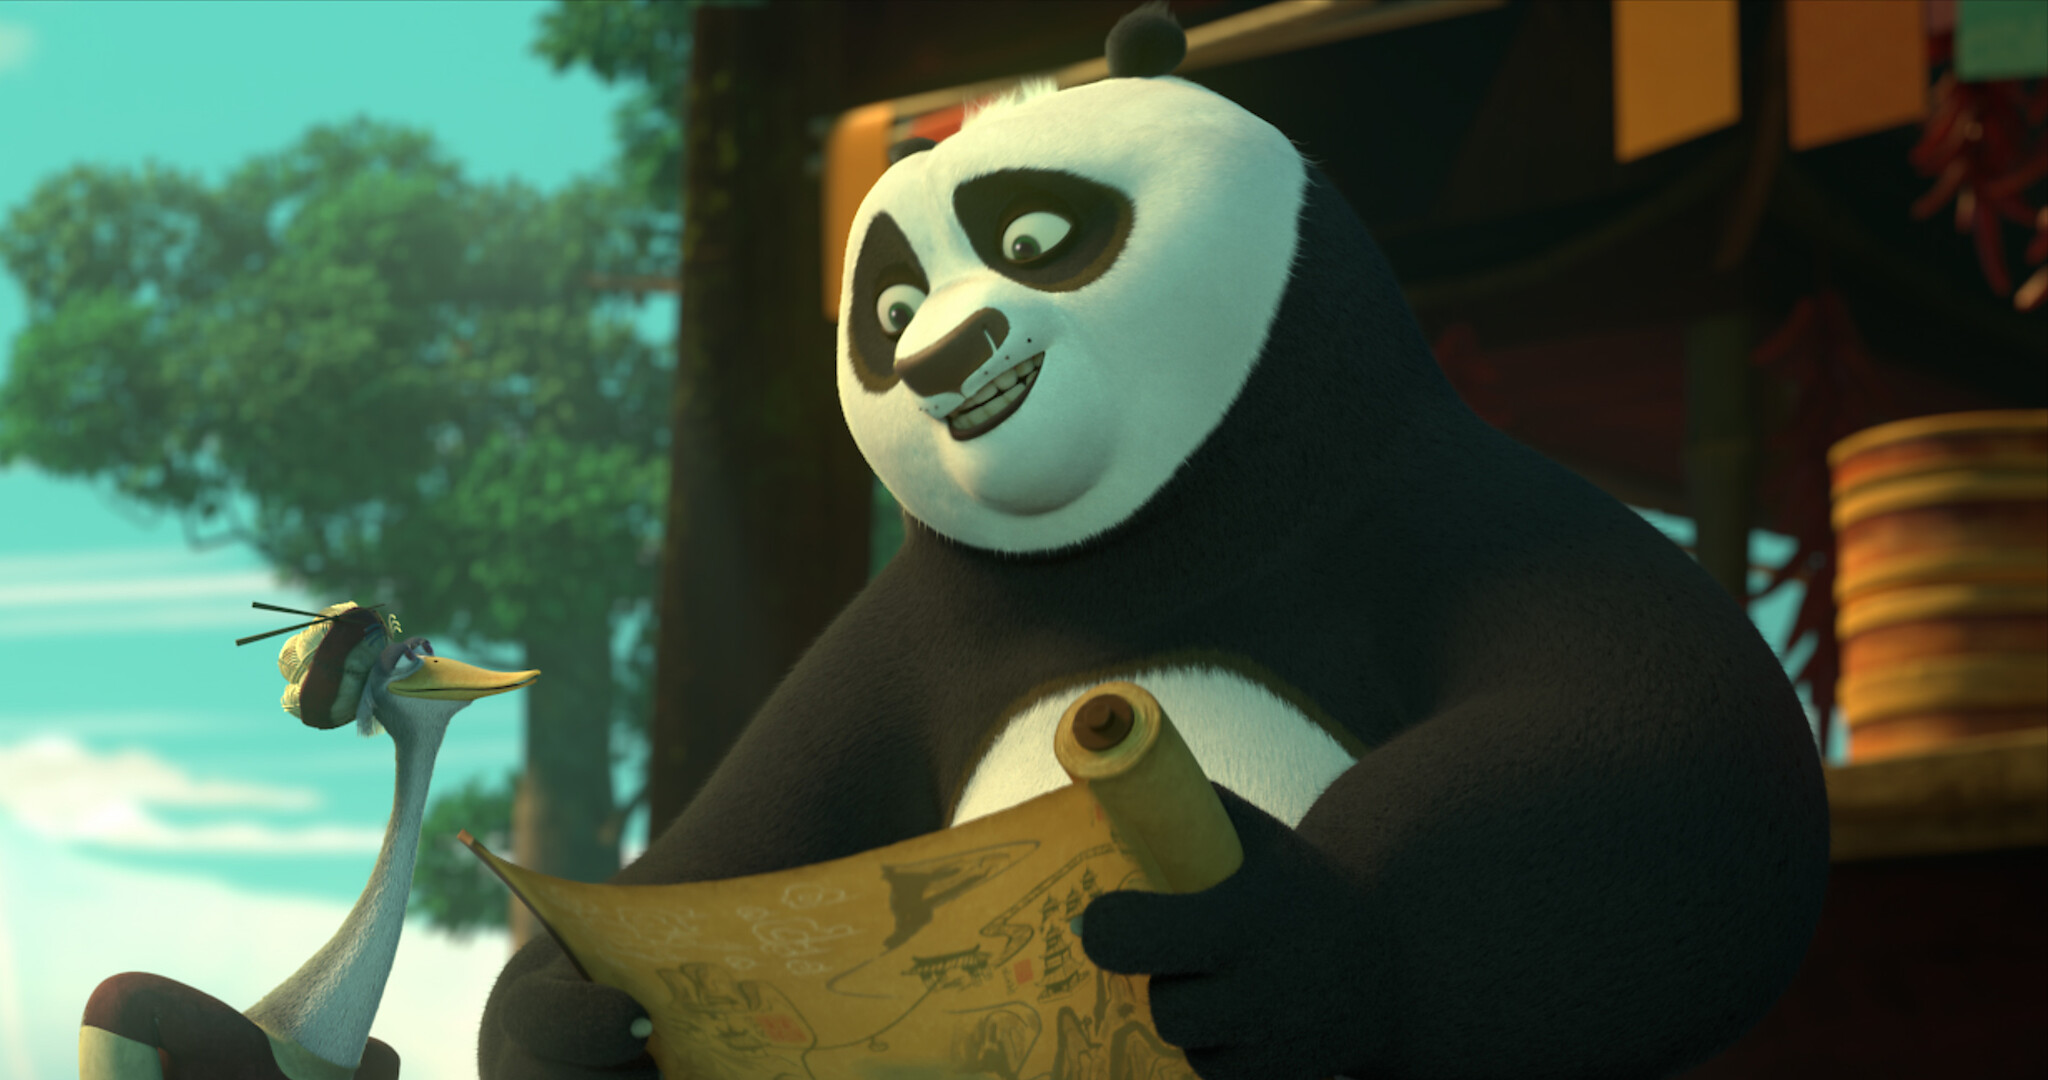 All You Need to Know About 'Kung Fu Panda: The Dragon Knight' Season 2 -  Netflix Tudum